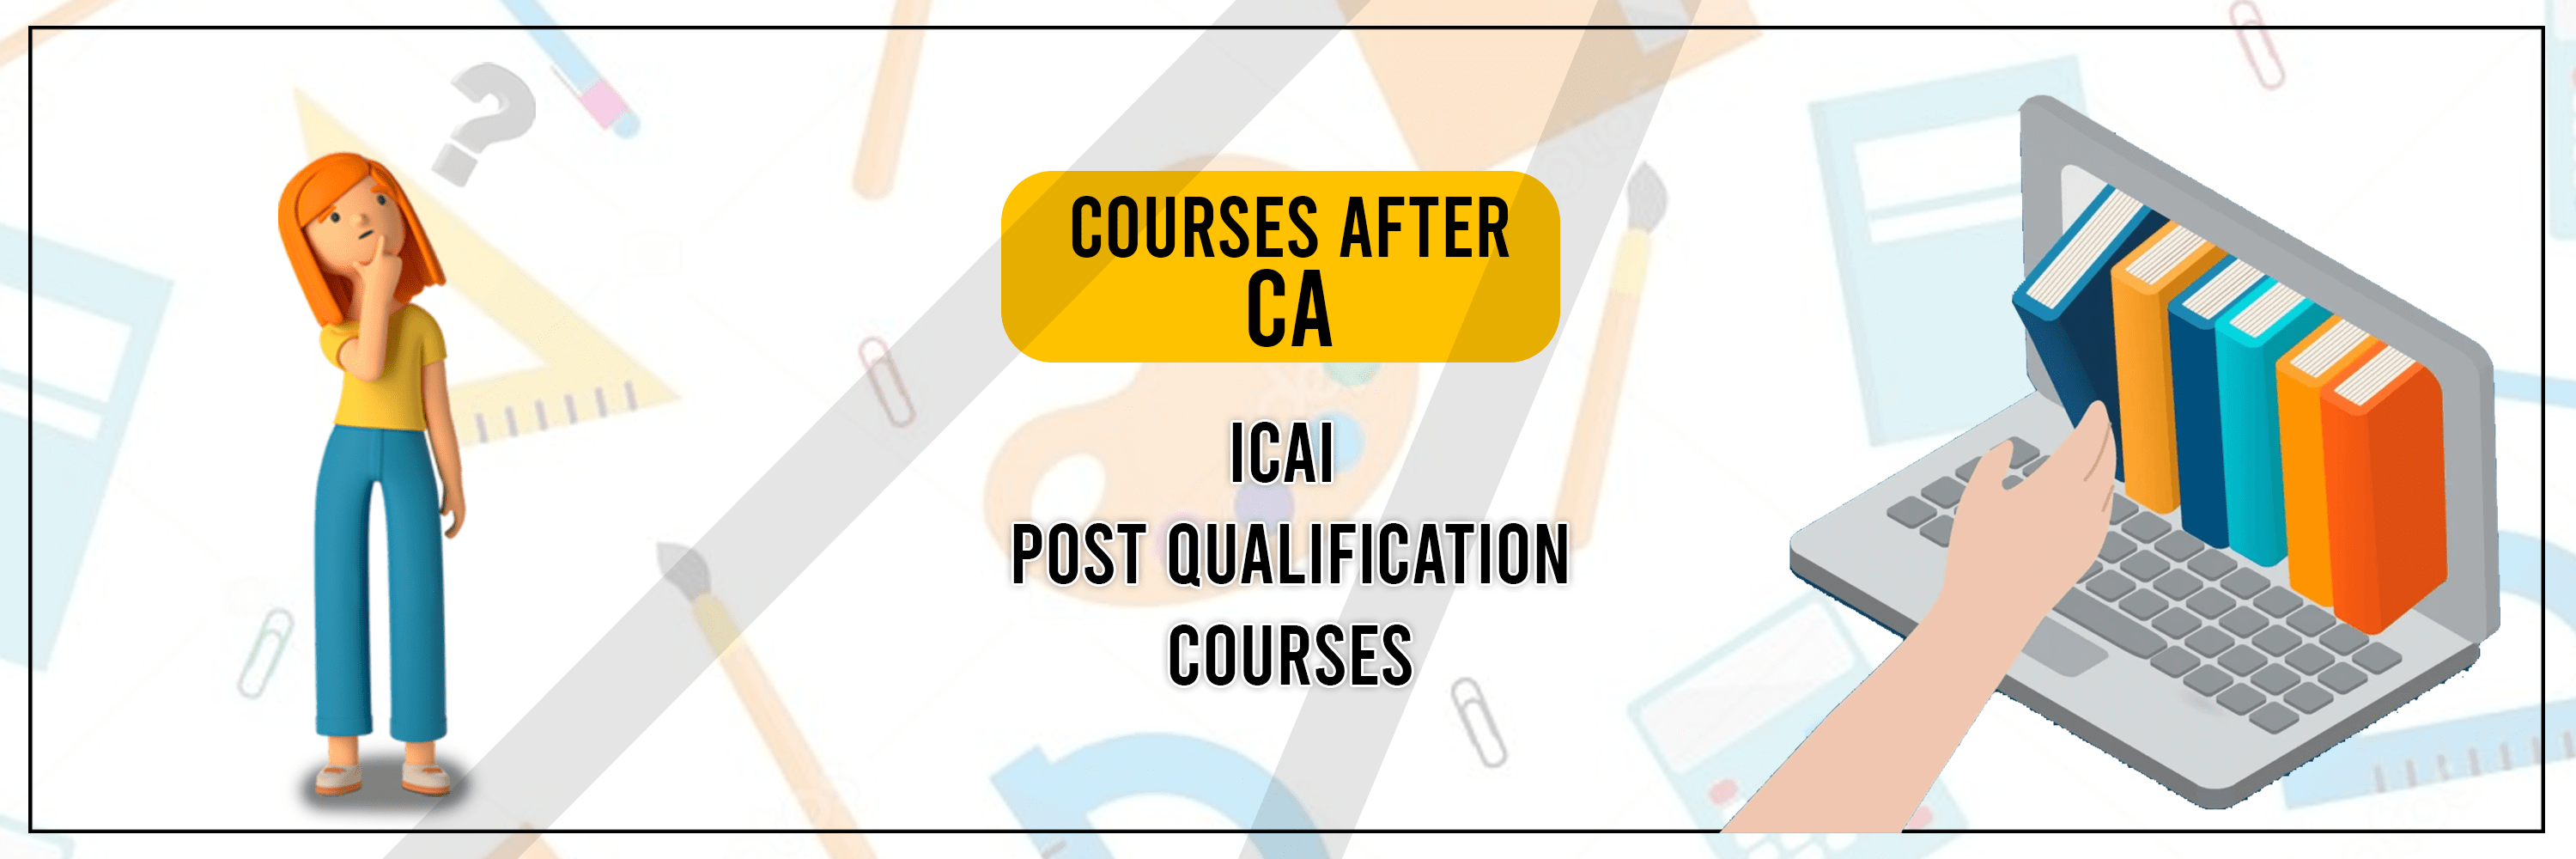 ICAI Post Qualification Courses